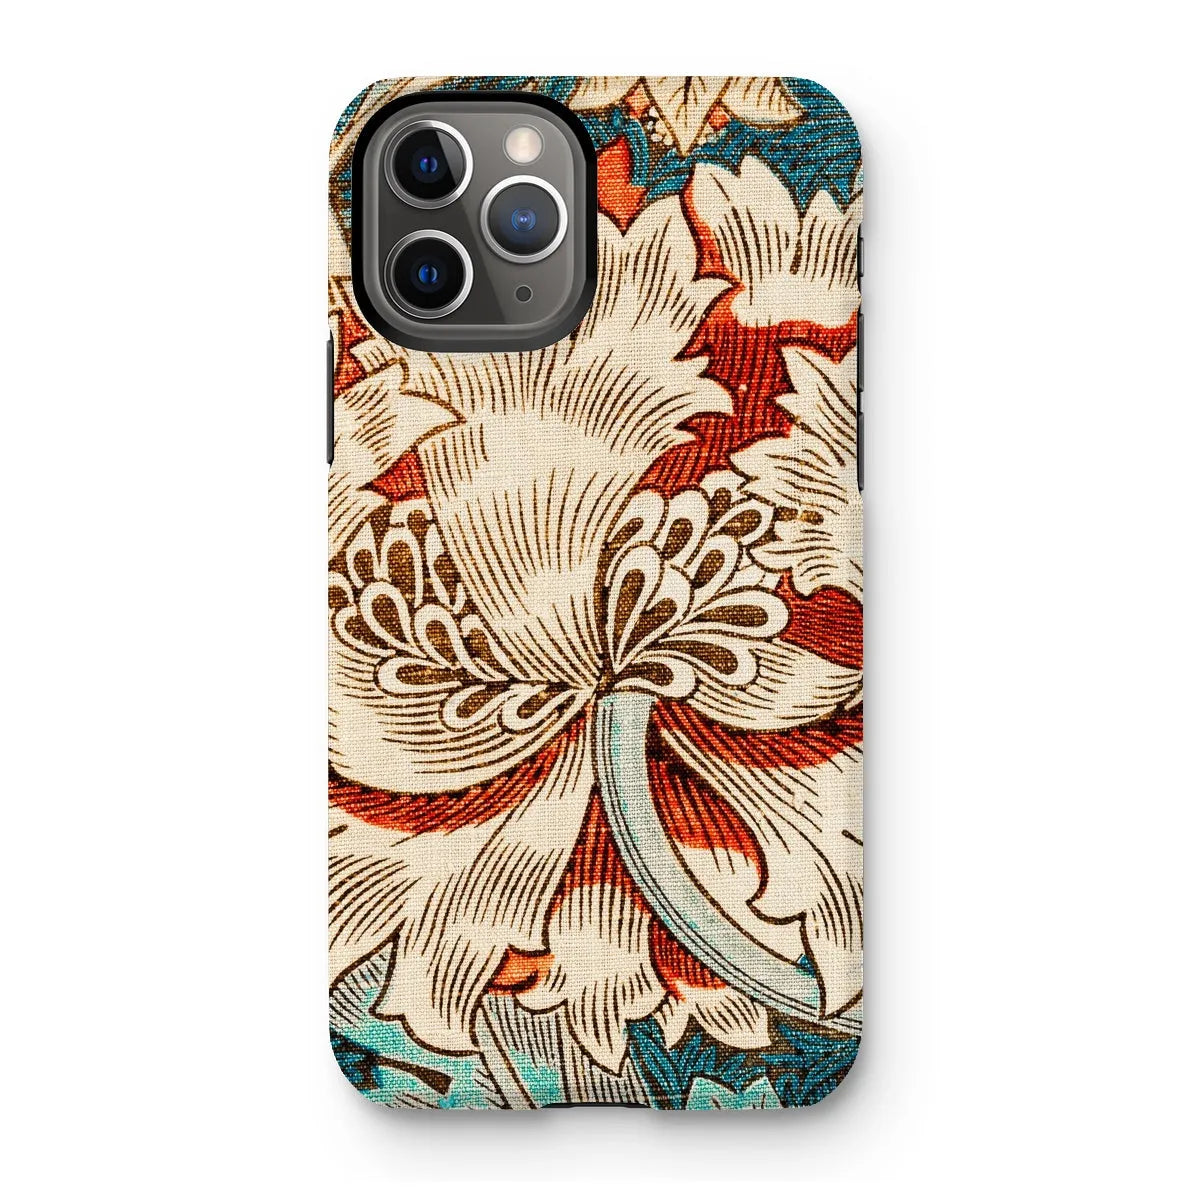 Honeysuckle Too By William Morris Phone Case - Iphone 11 Pro / Matte - Mobile Phone Cases - Aesthetic Art